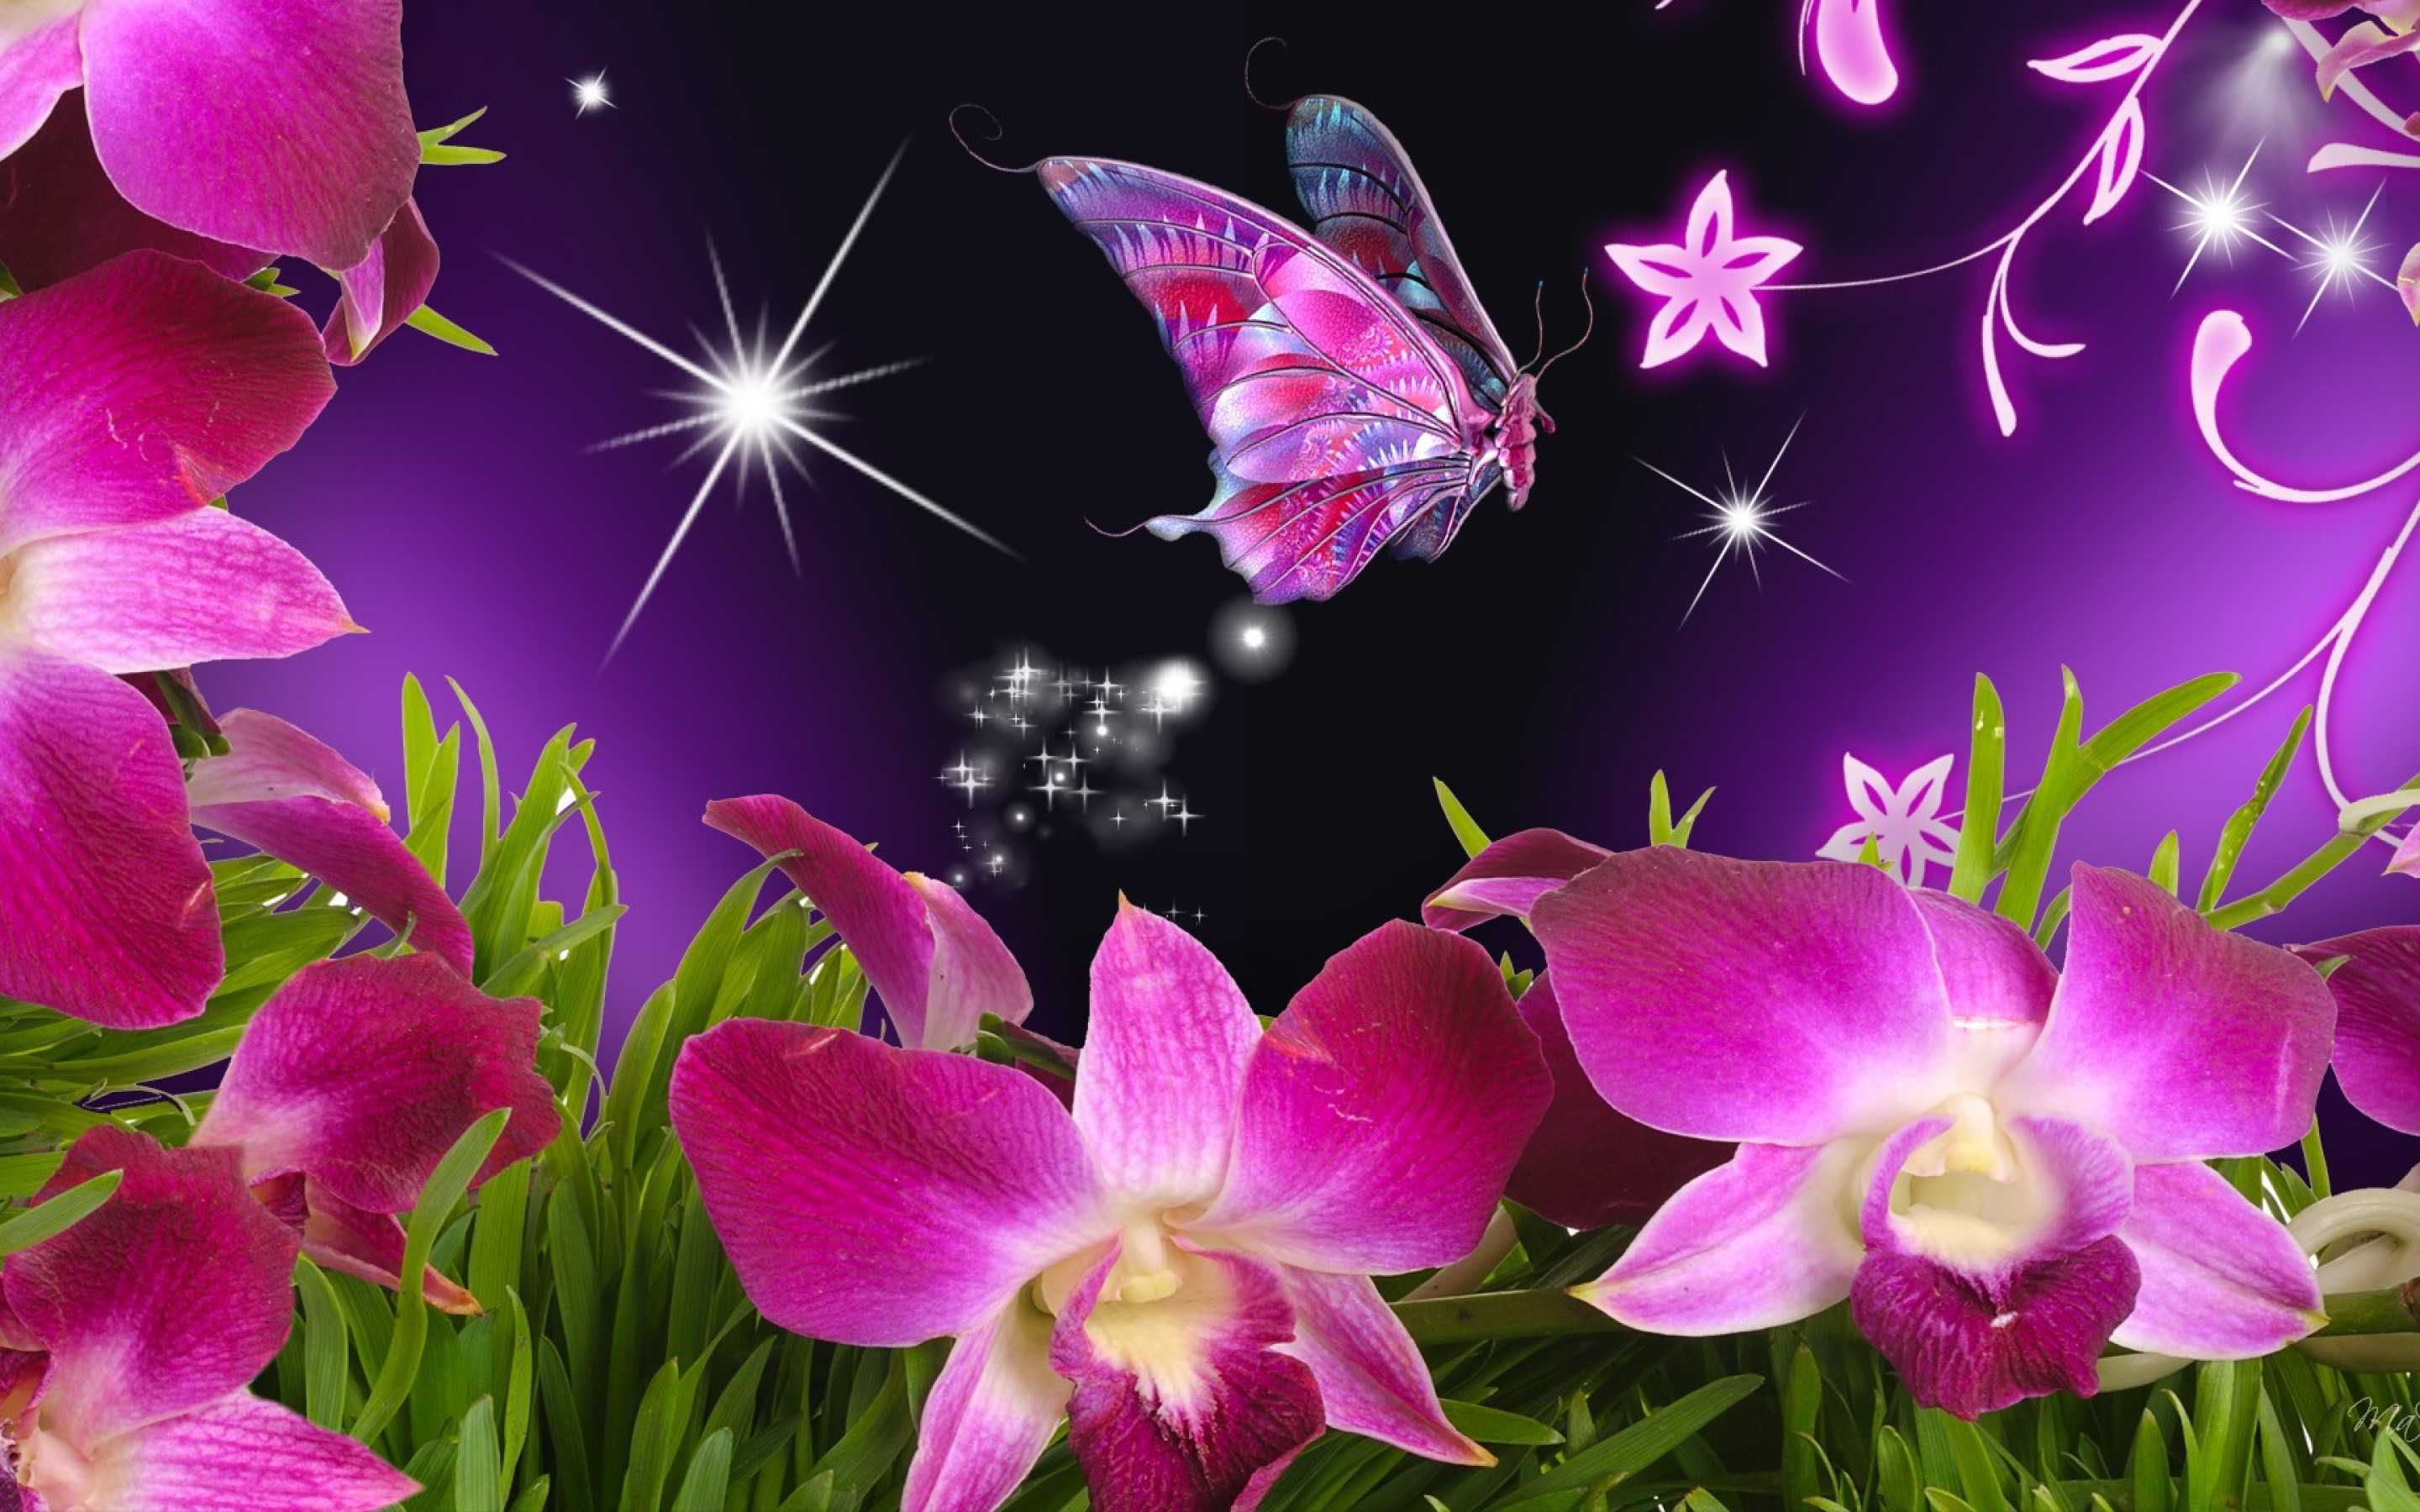 3D Flower Wallpaper For Mobile Desktop HD Image Pc Natural With